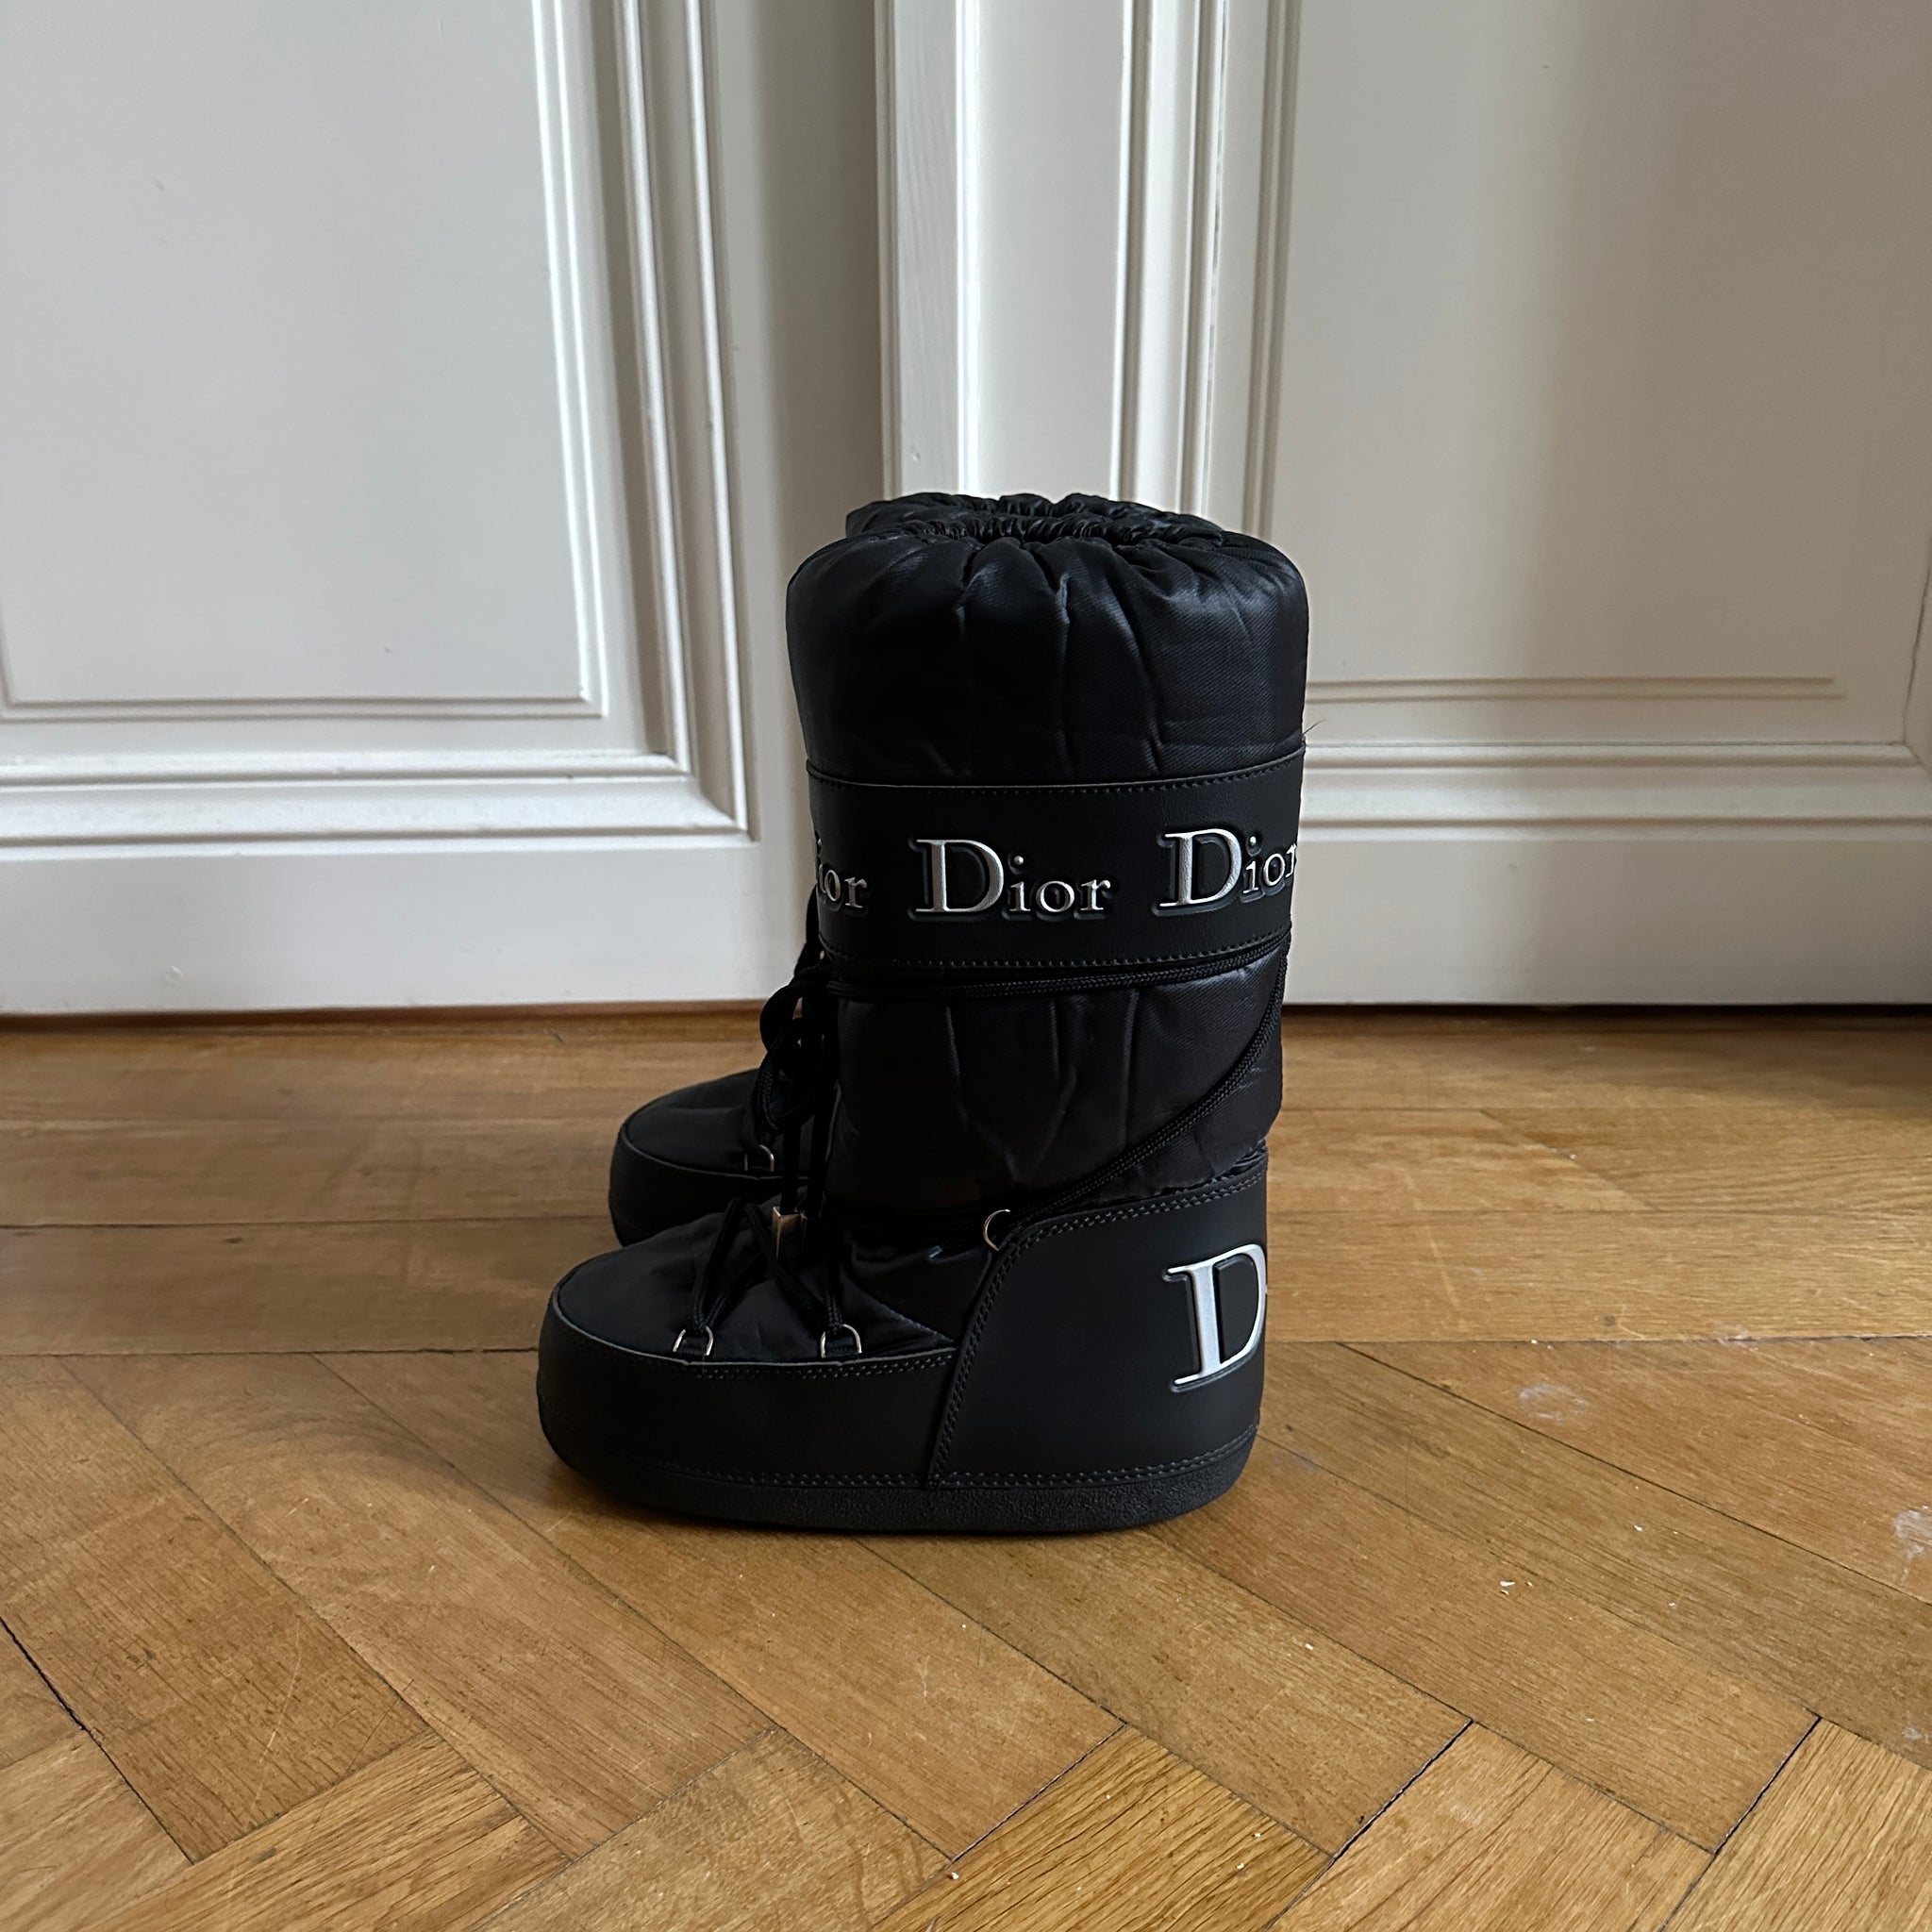 Christian Dior by John Galliano Moon Boots - Ākaibu Store